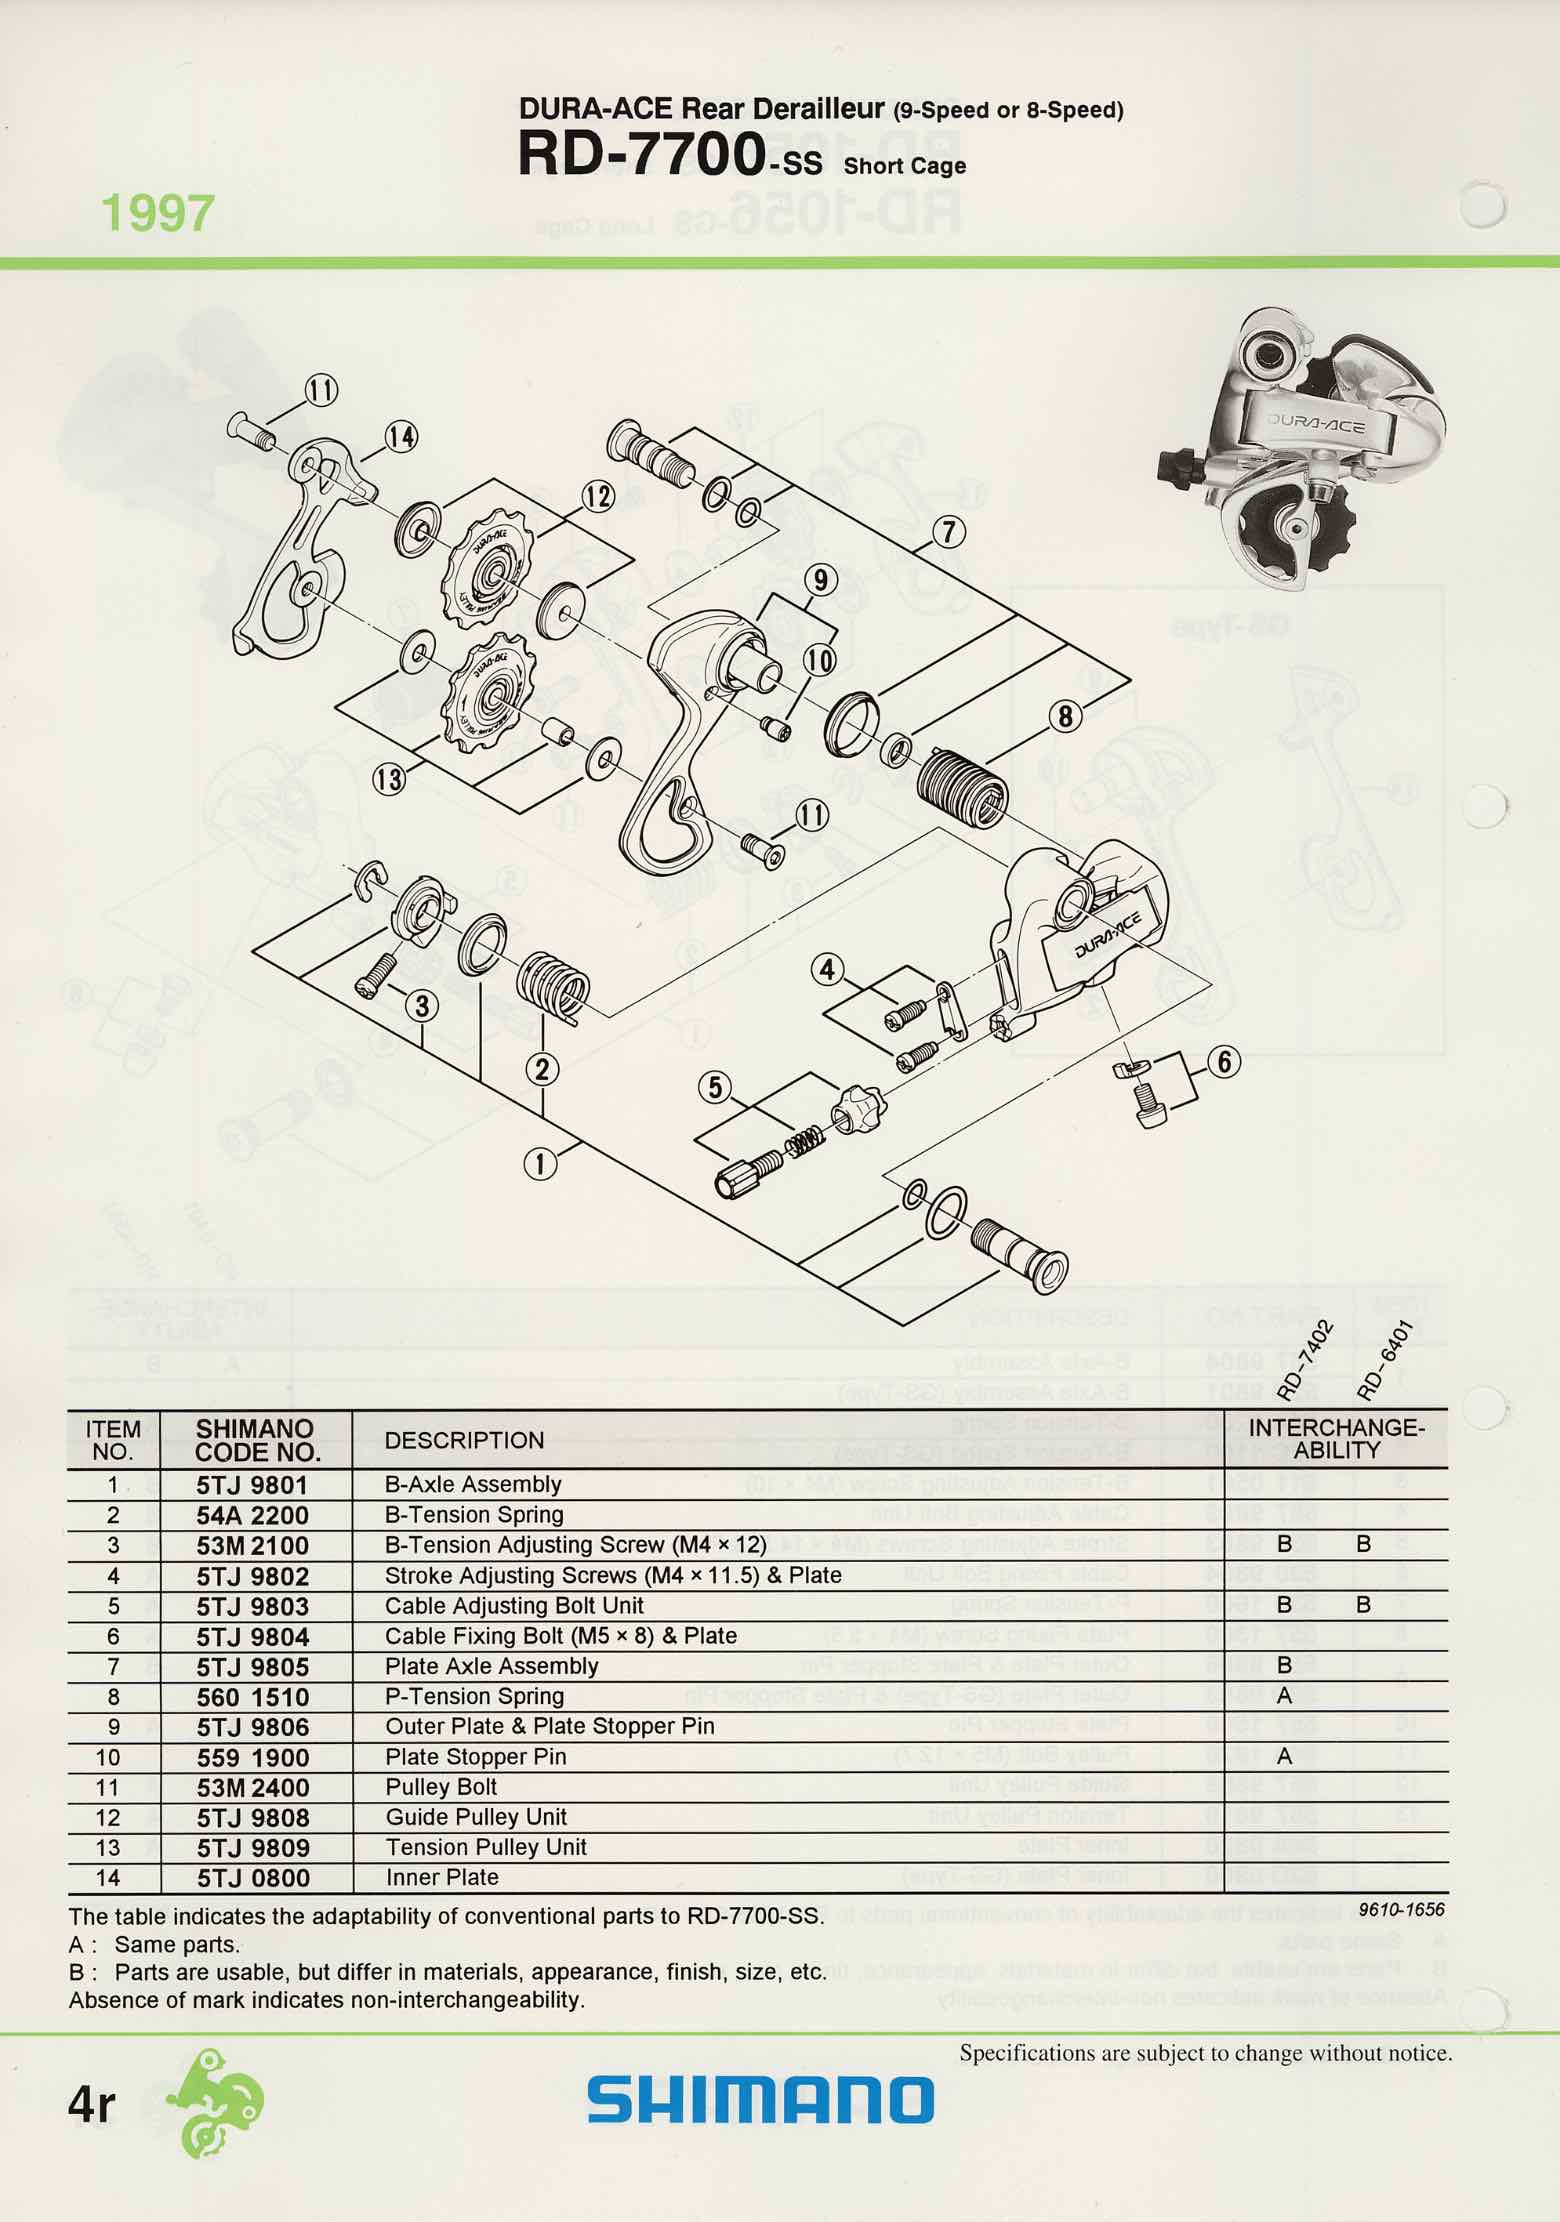 Shimano Spare Parts Catalogue - 1994 to 2004 s5r p4r main image